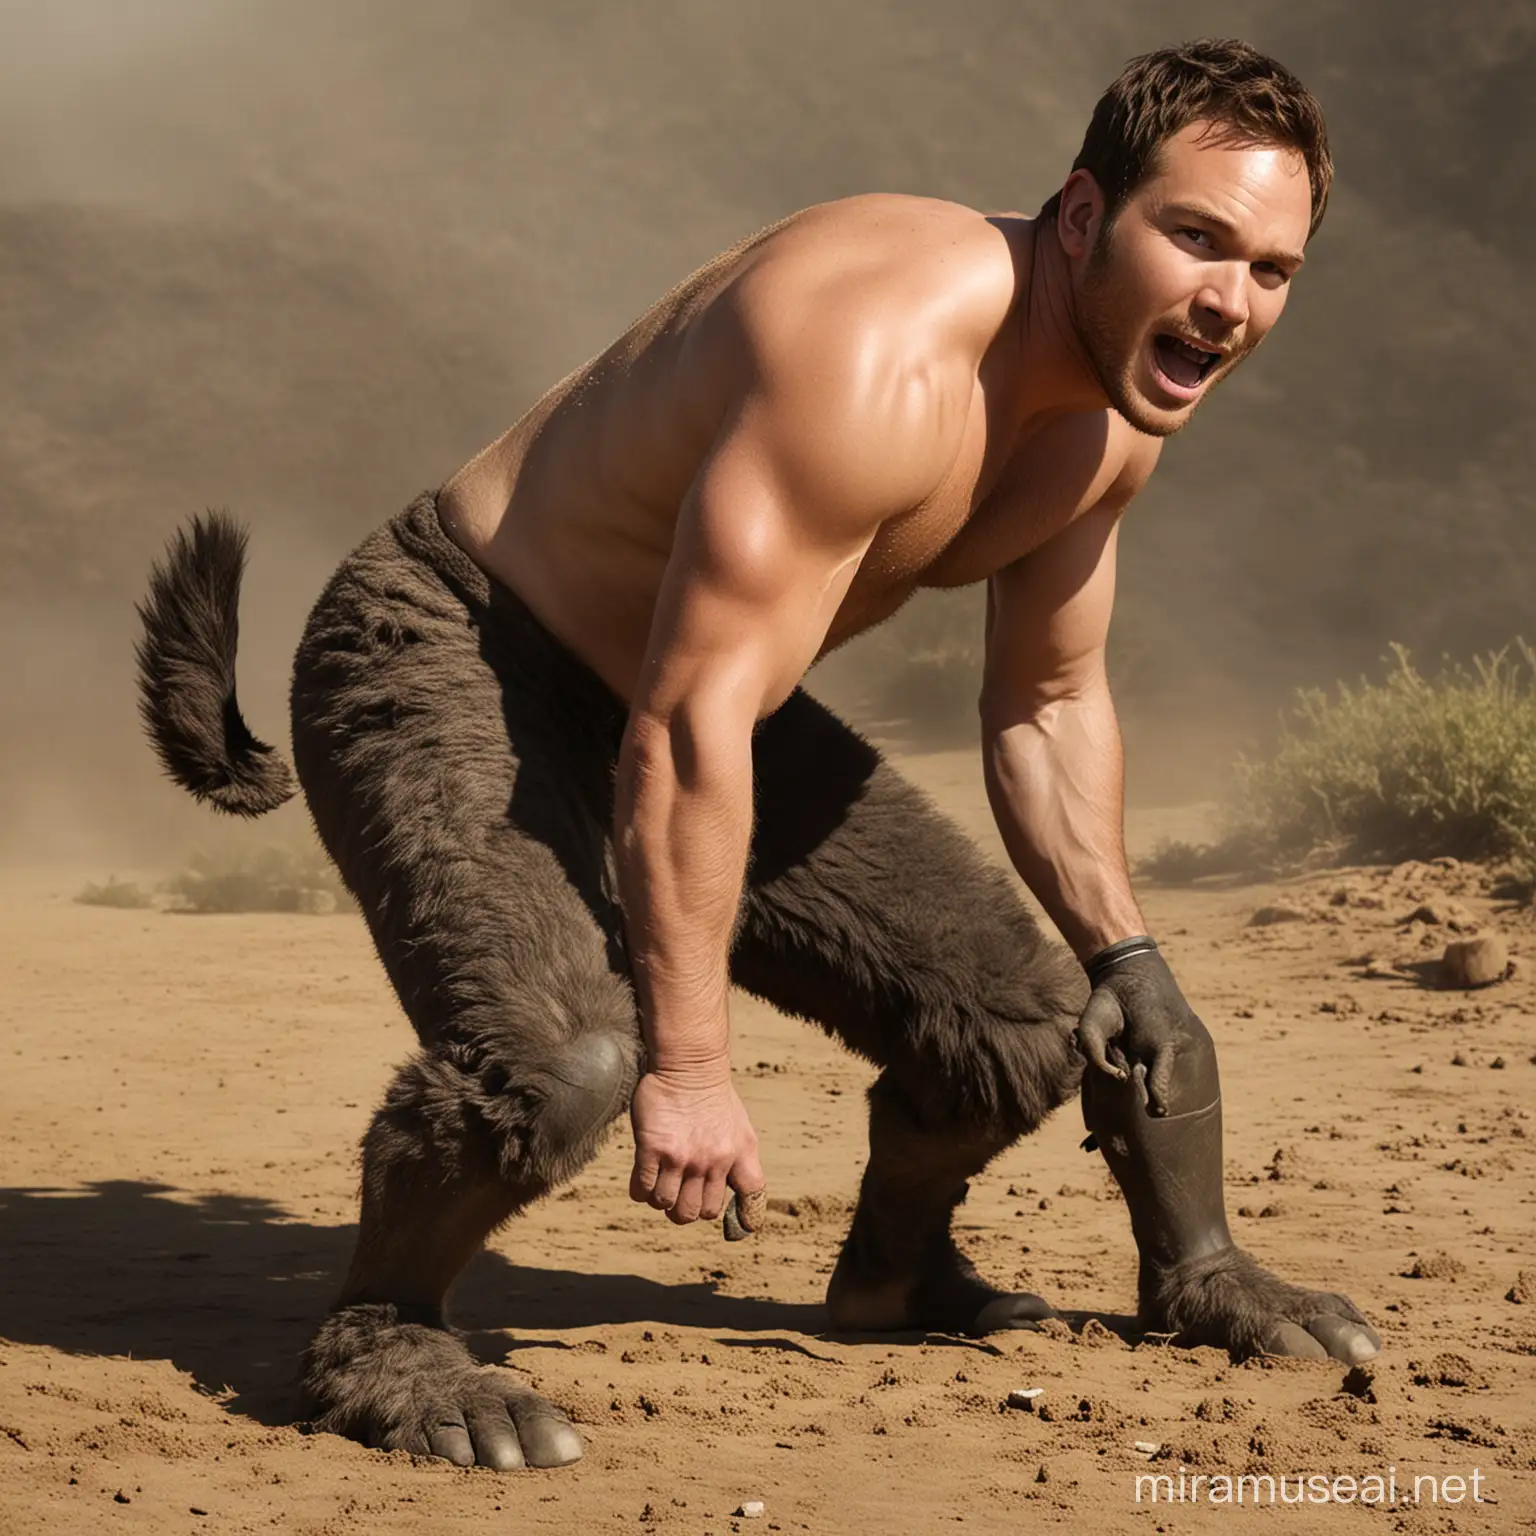 Chris Pratt Transforms into a Donkey Human Actor Portraying Donkey Transformation